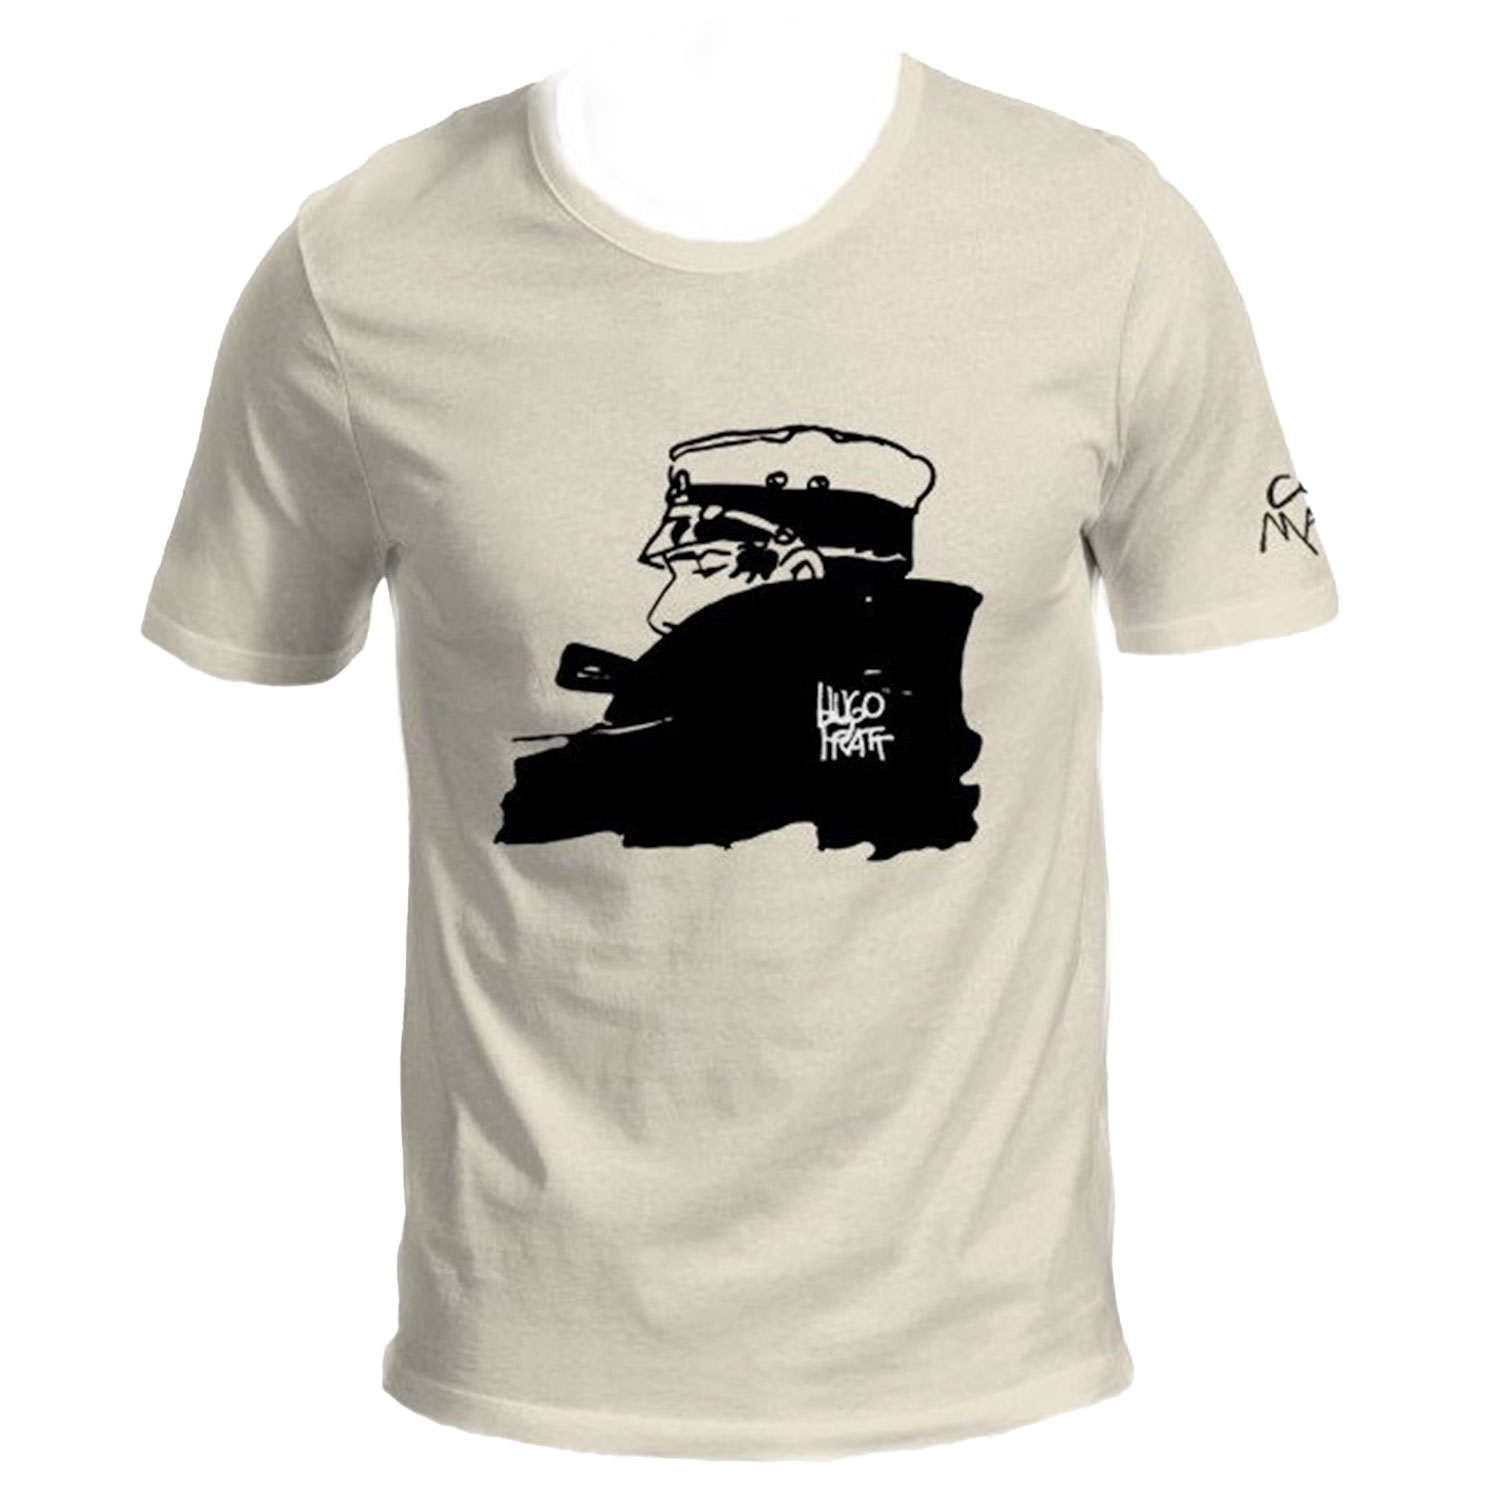 T-shirt Hugo Pratt :  Corto Maltese , Nocturne - Ecru - Taille L